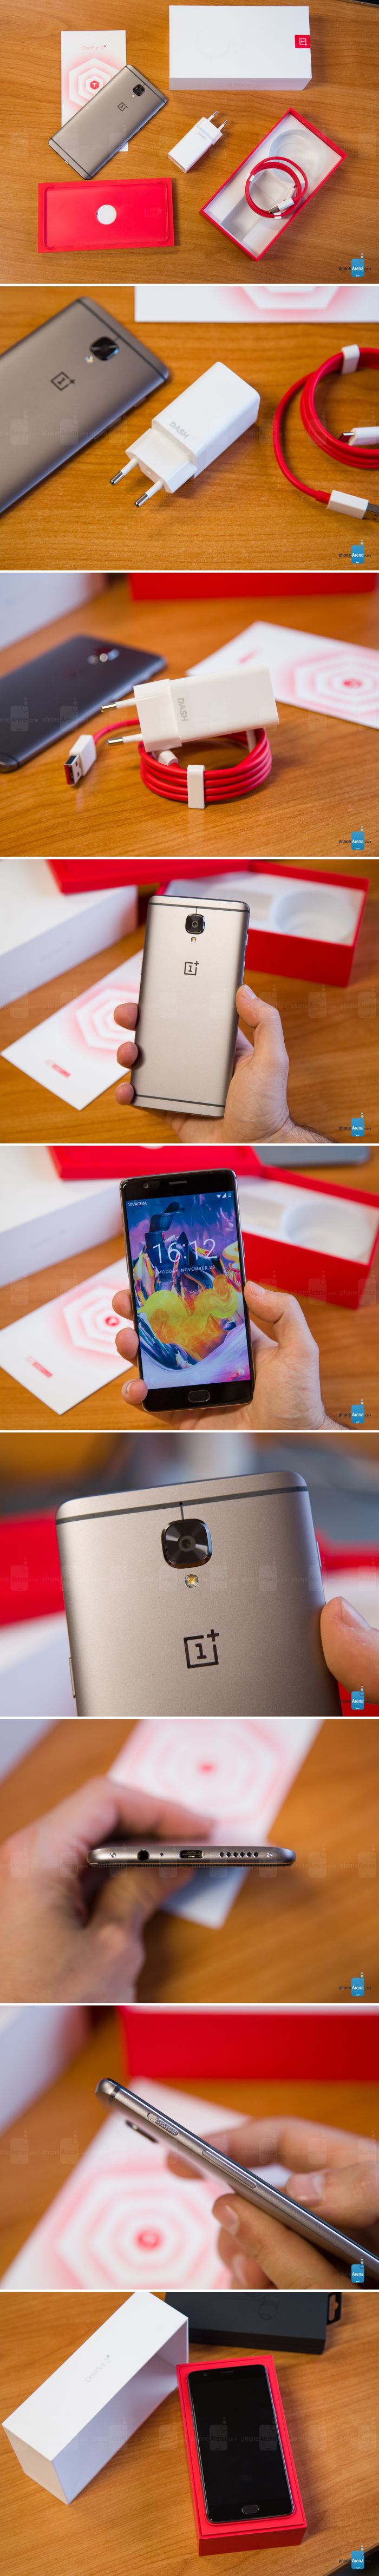 OnePlus 3T: kicsomagolós videó